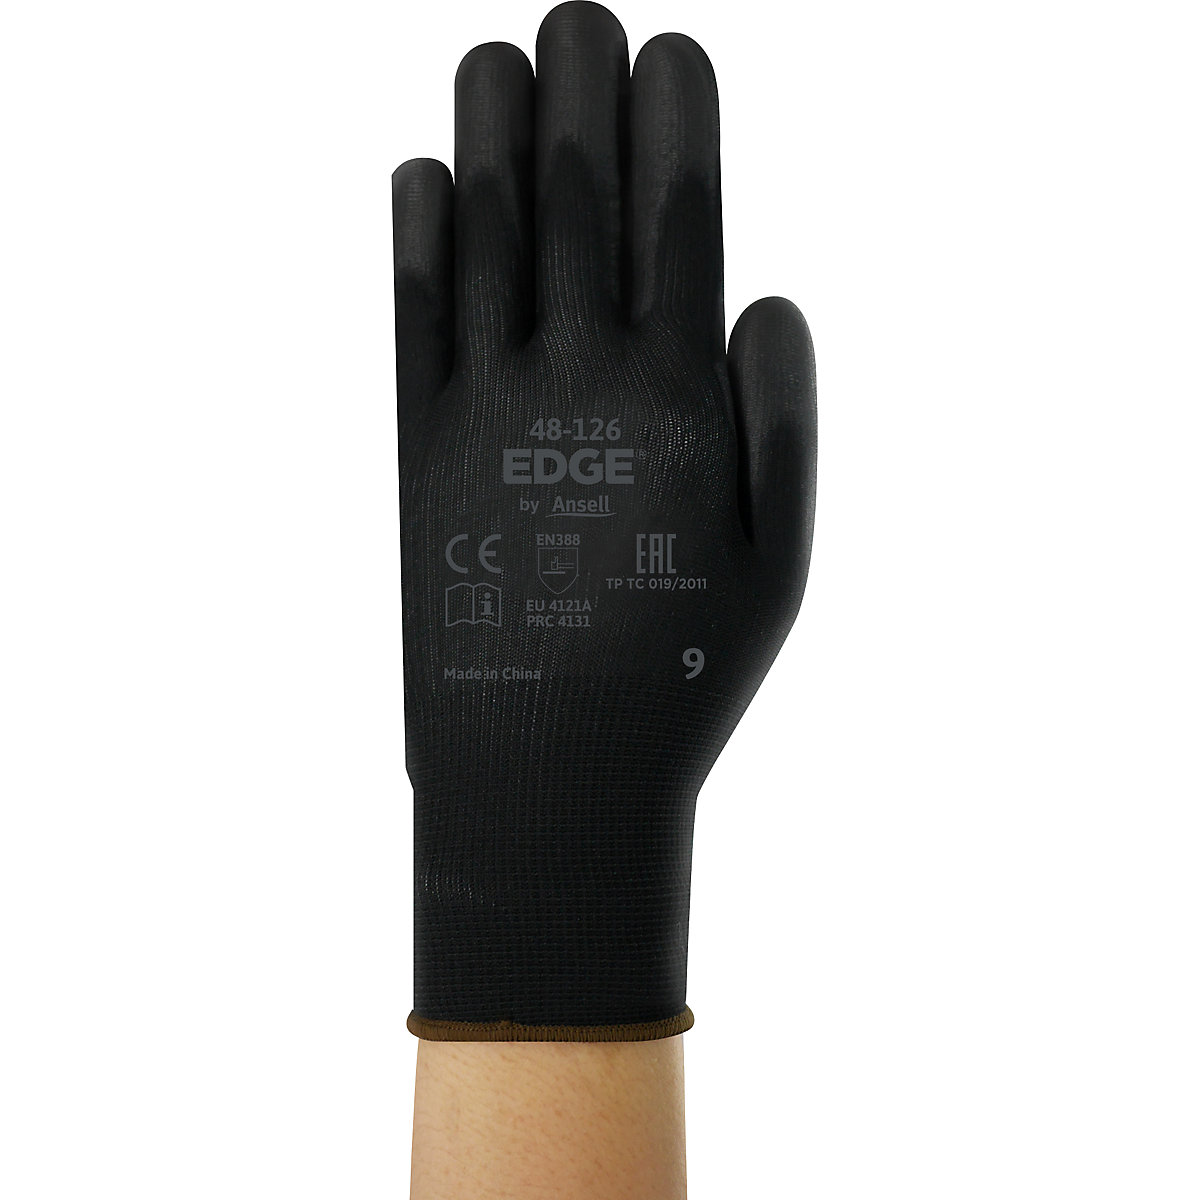 EDGE® 48-126 work gloves - Ansell